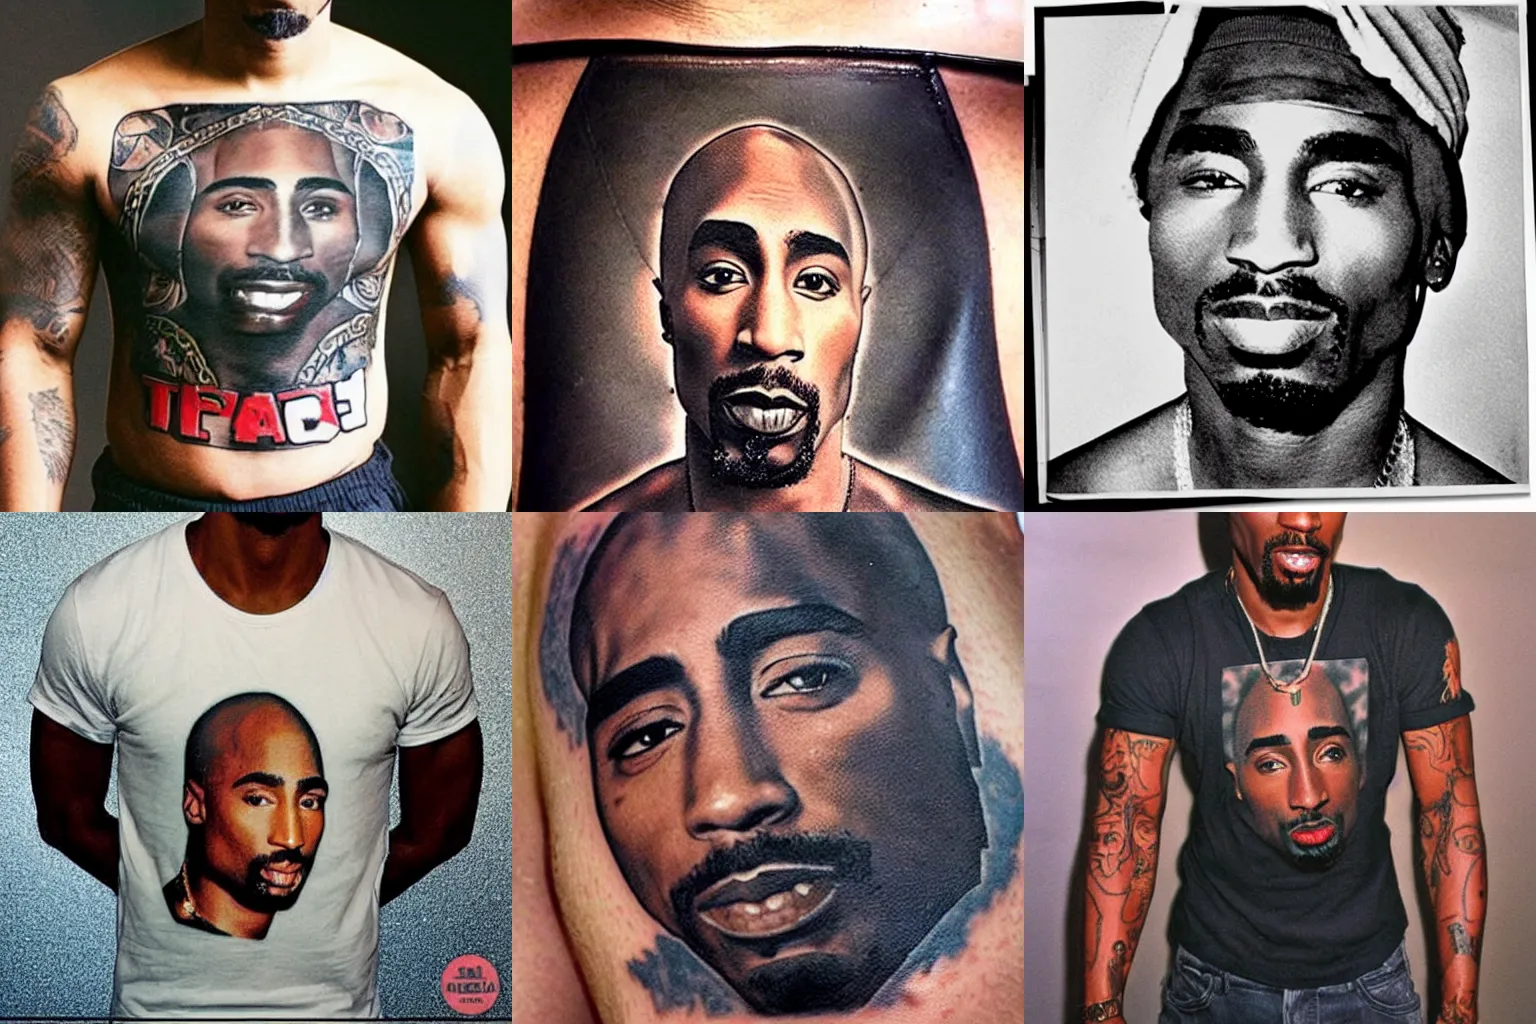 Prompt: tupac wearing a shirt tattoo